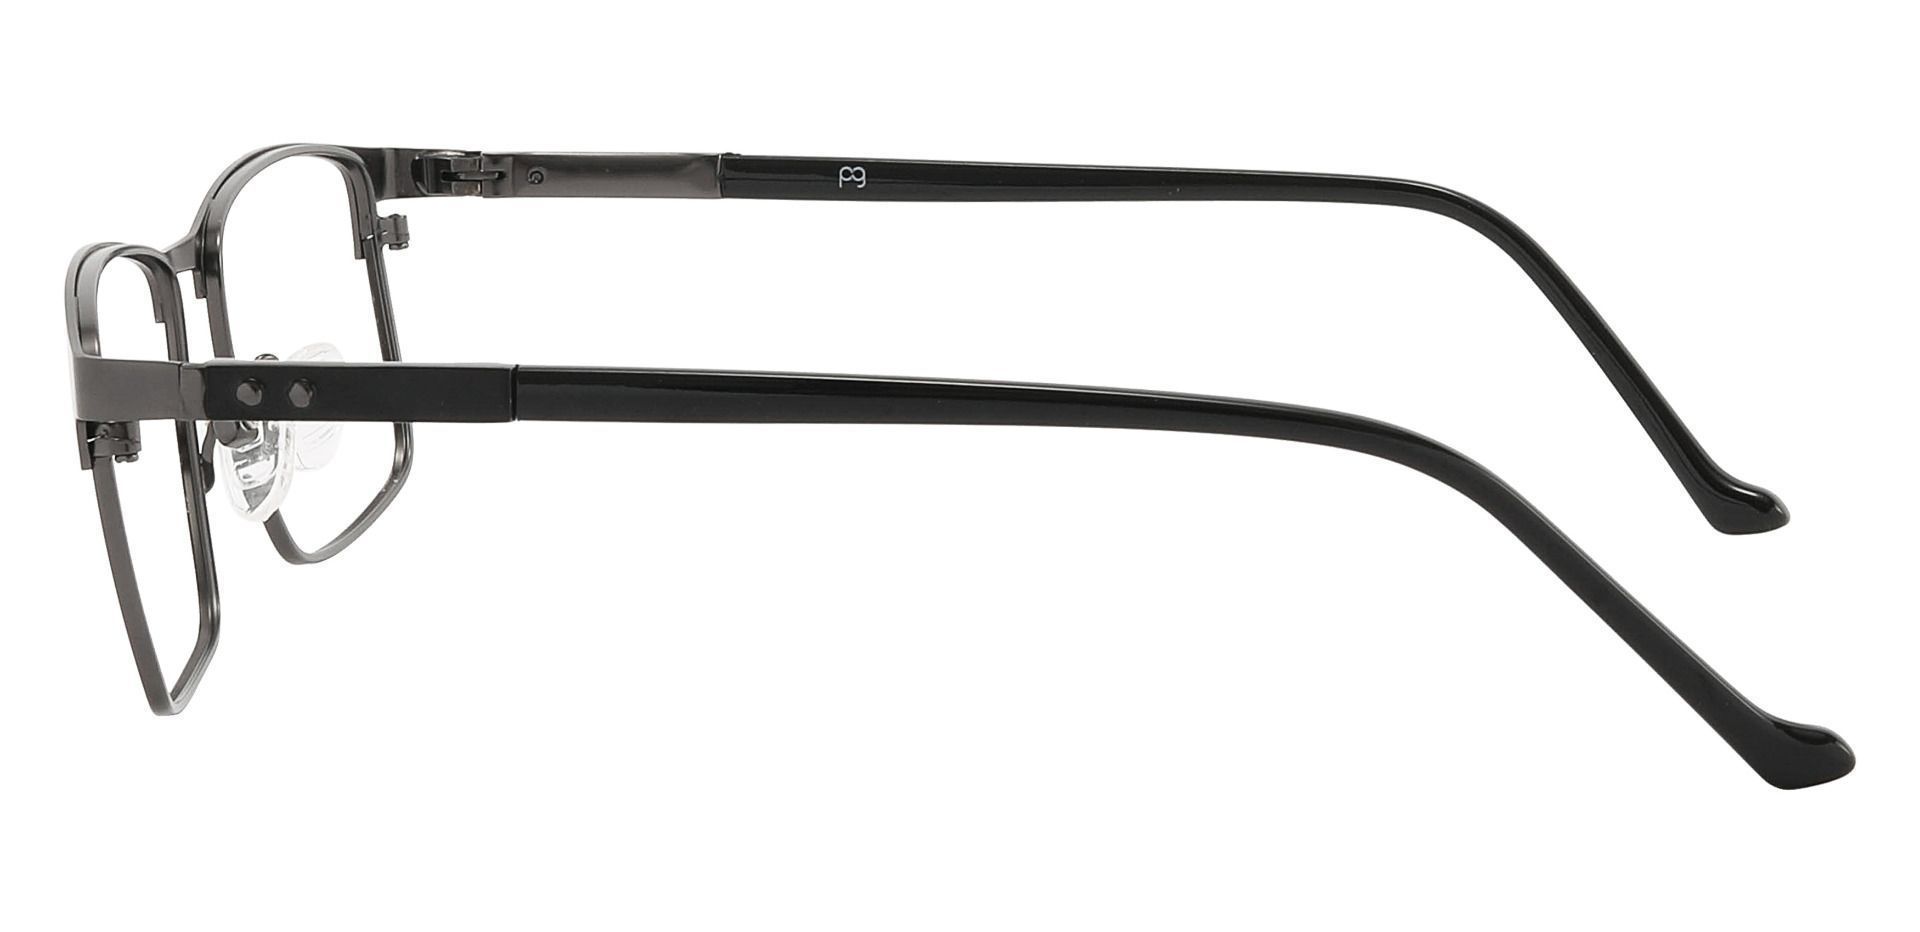 Flynn Browline Eyeglasses Frame - Gray